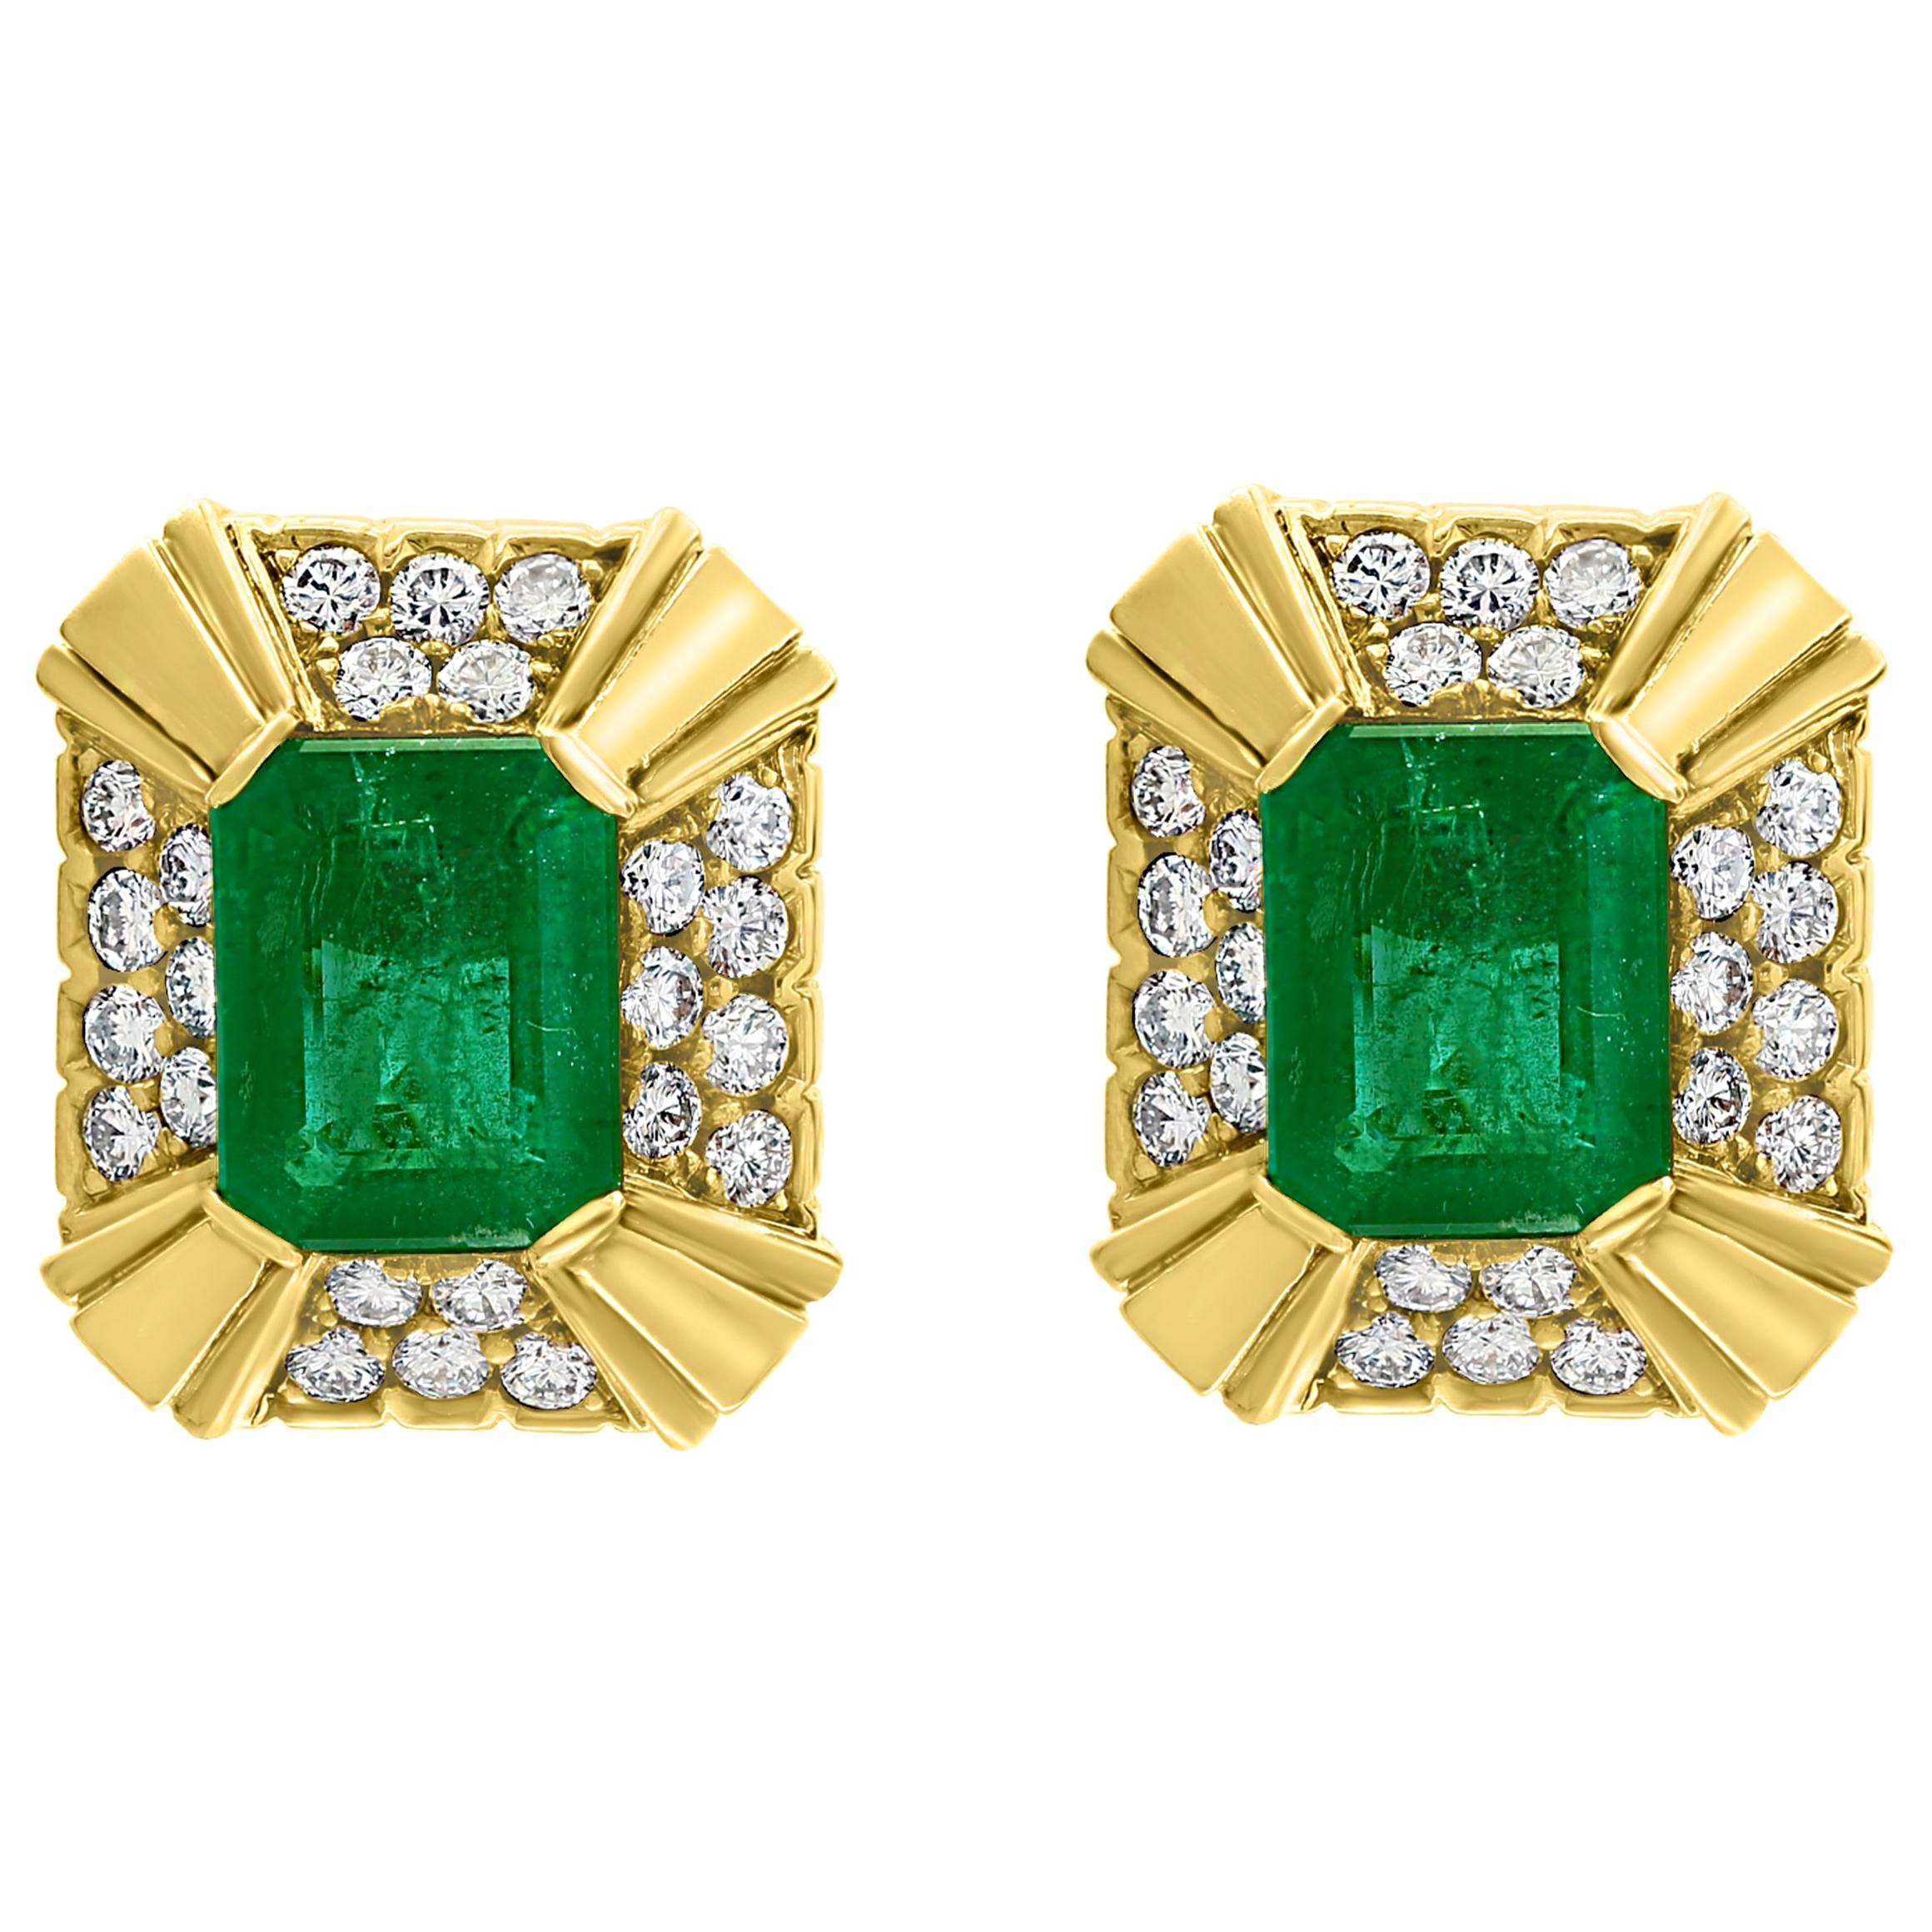 12 Carat Emerald Cut Emerald Diamond Clip Earrings 18 Karat Yellow Gold, Estate